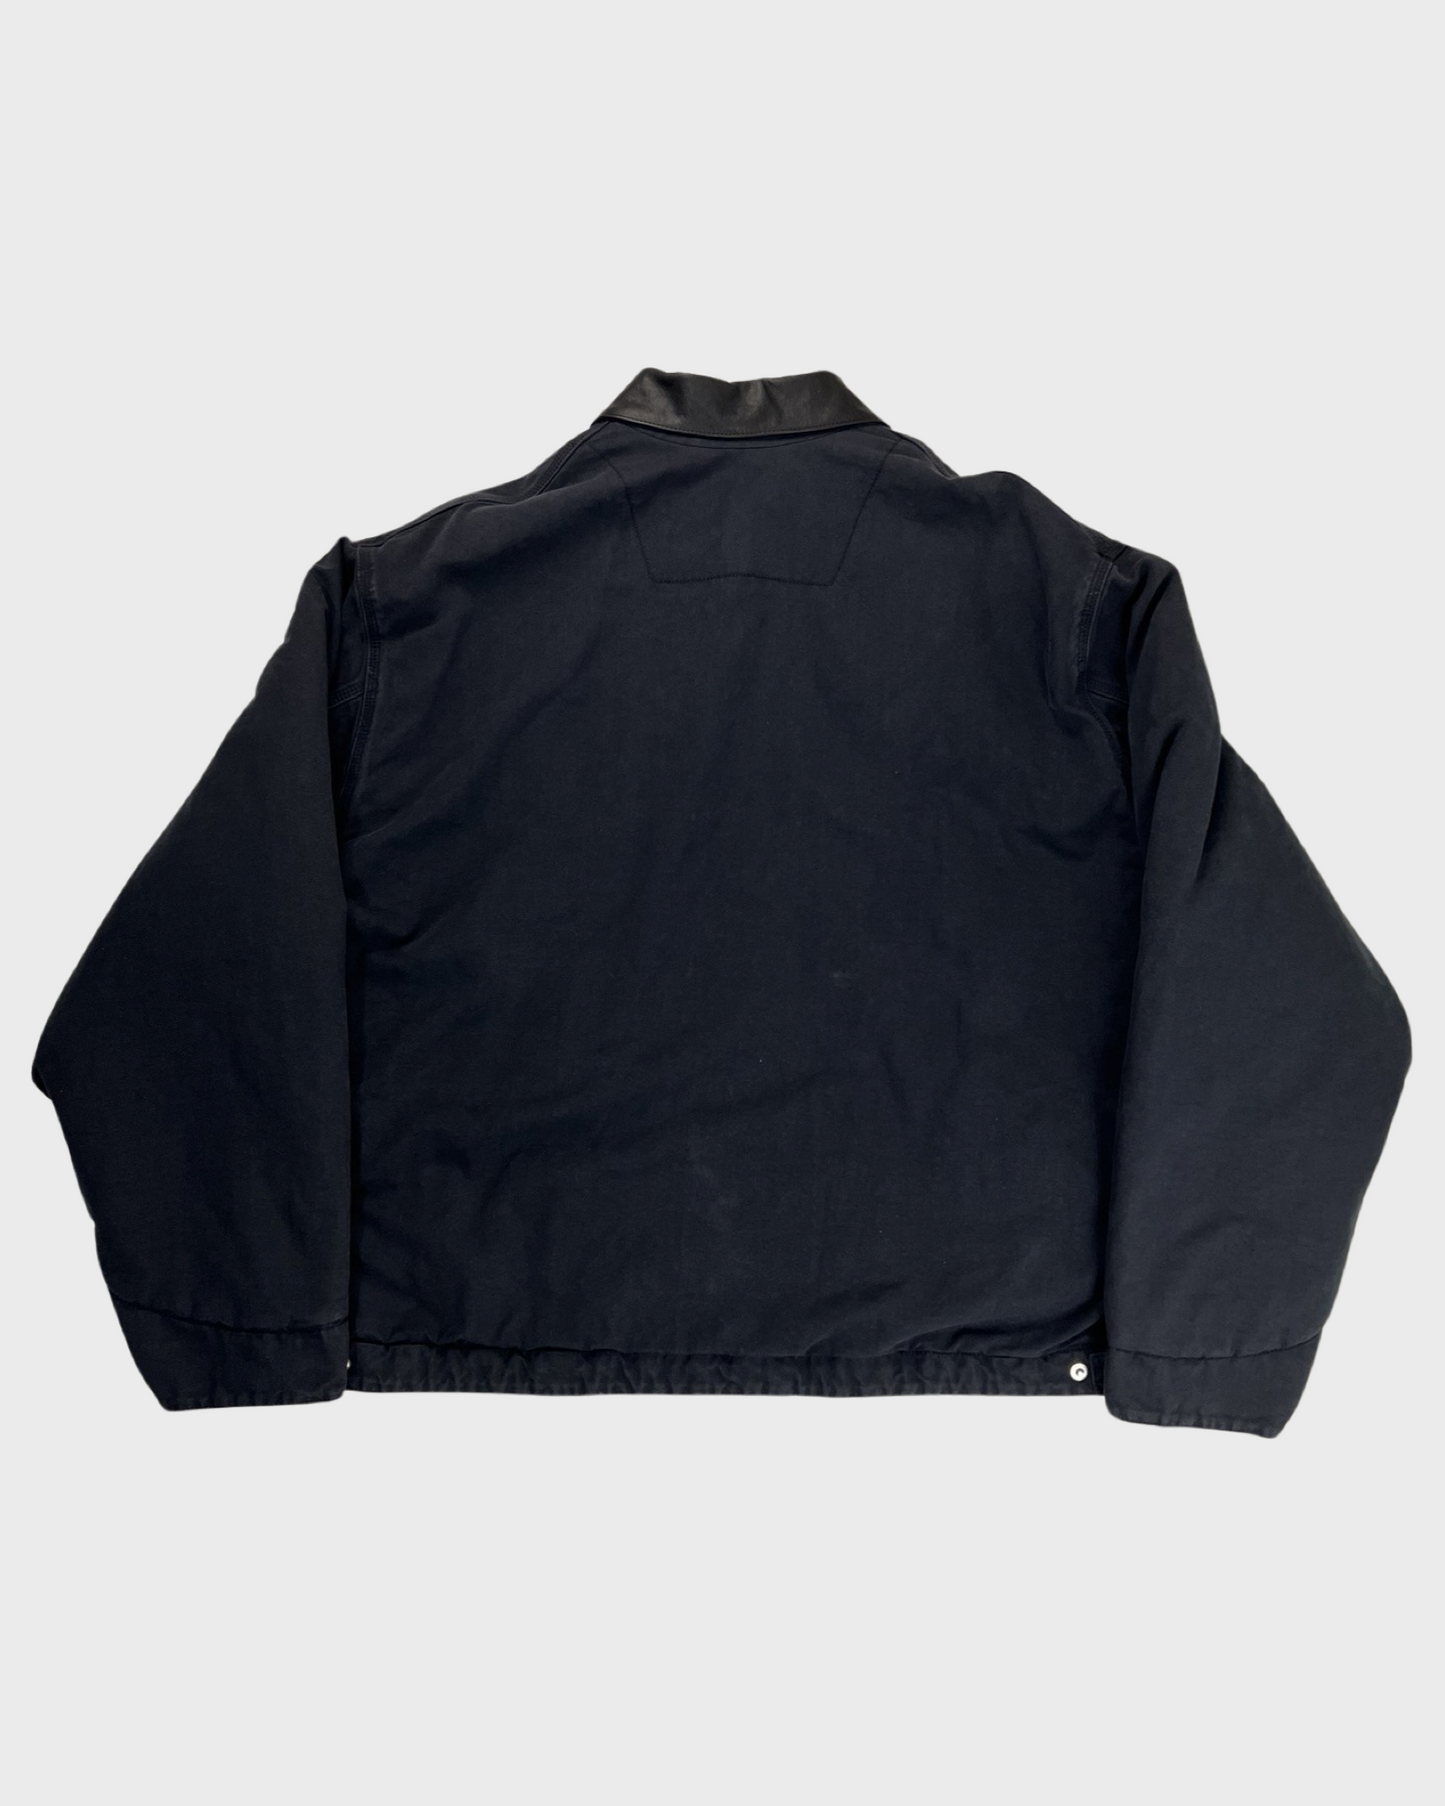 Balenciaga AW21 carhartt style workwear Jacket SZ:48